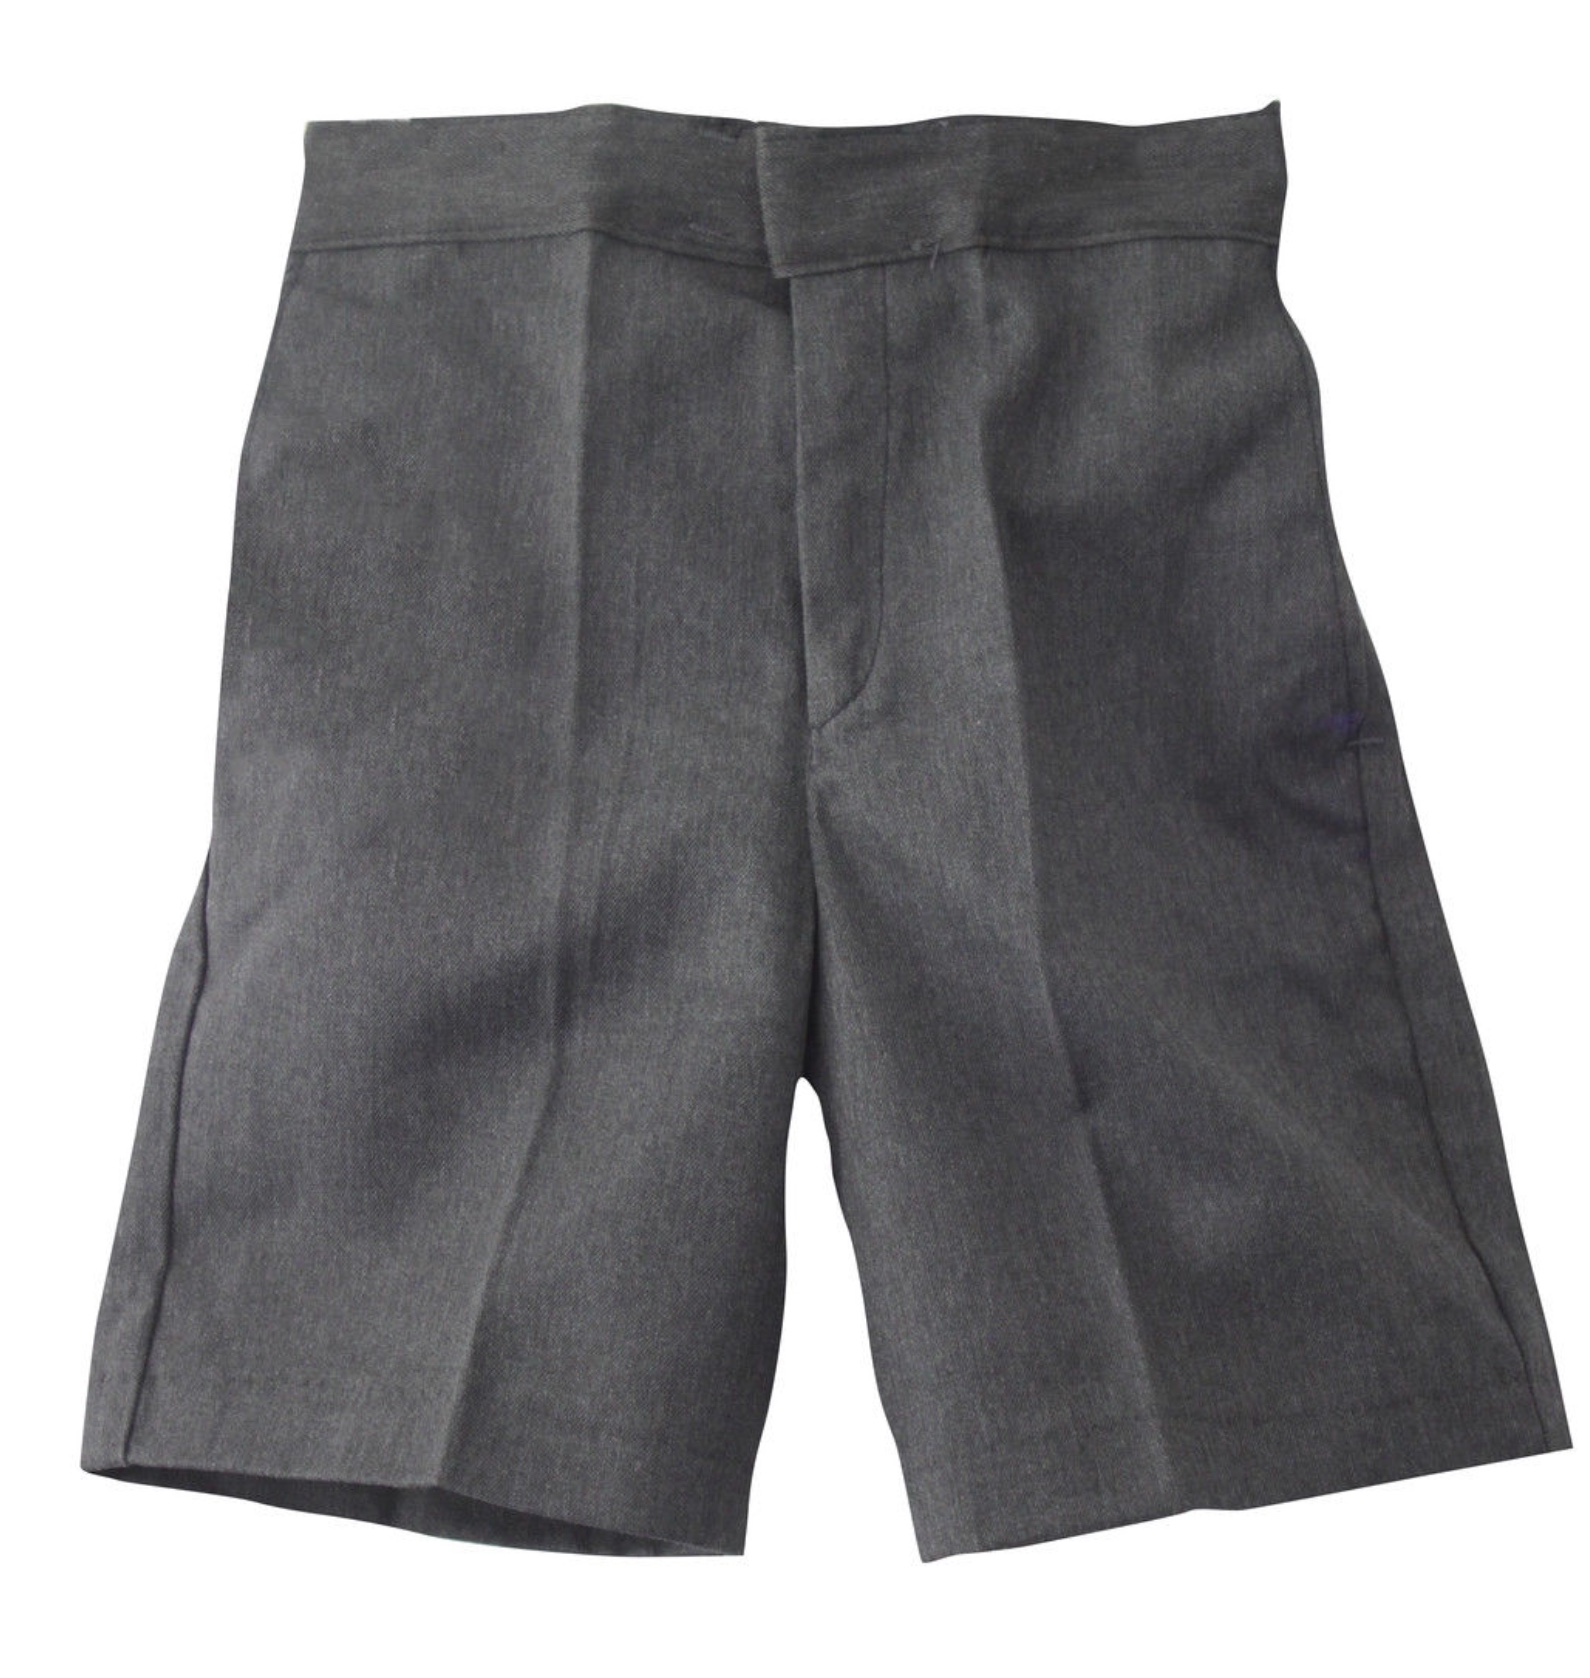 Boys' Dark Grey Shorts, Flat Front, Adjustable Waist, Zip Fly, Side and Back Pockets 9-10 Y